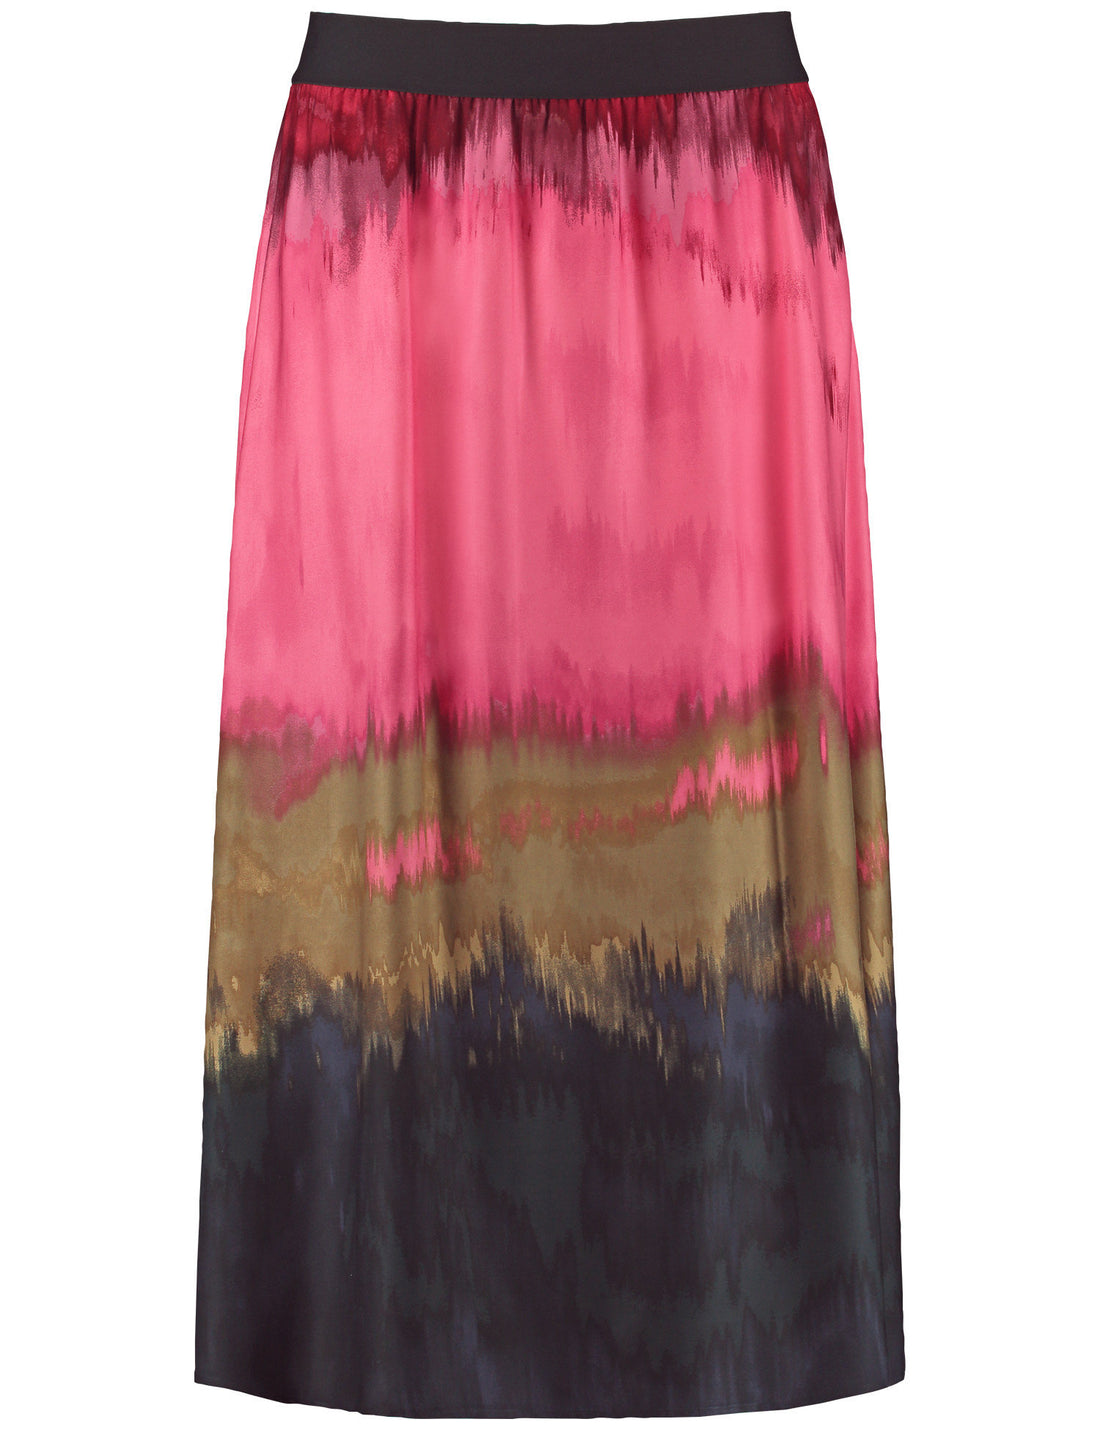 Long Skirt With An Elasticated Waistband_410001-21007_3442_02